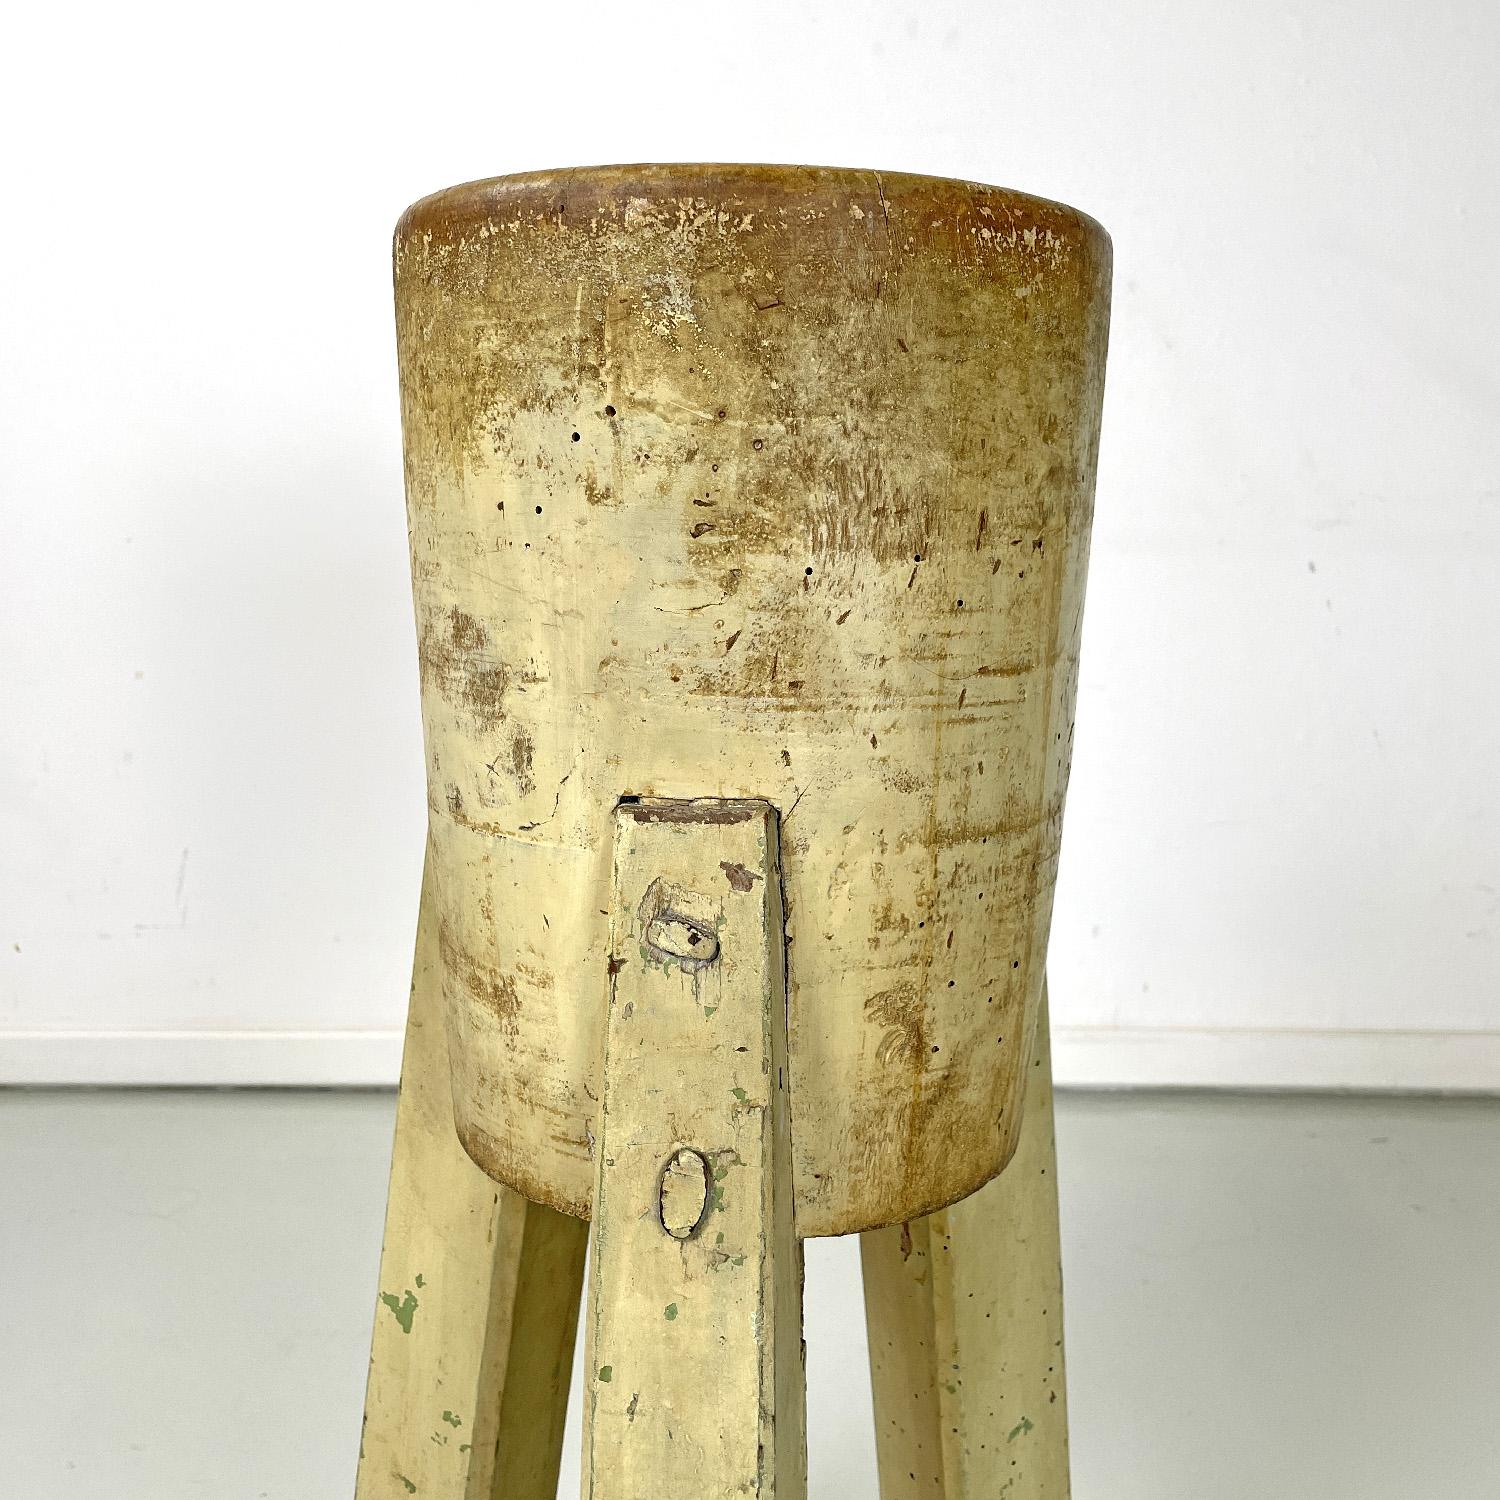 Metal Italian rustic wooden pedestal or stool with three legs, 1970s